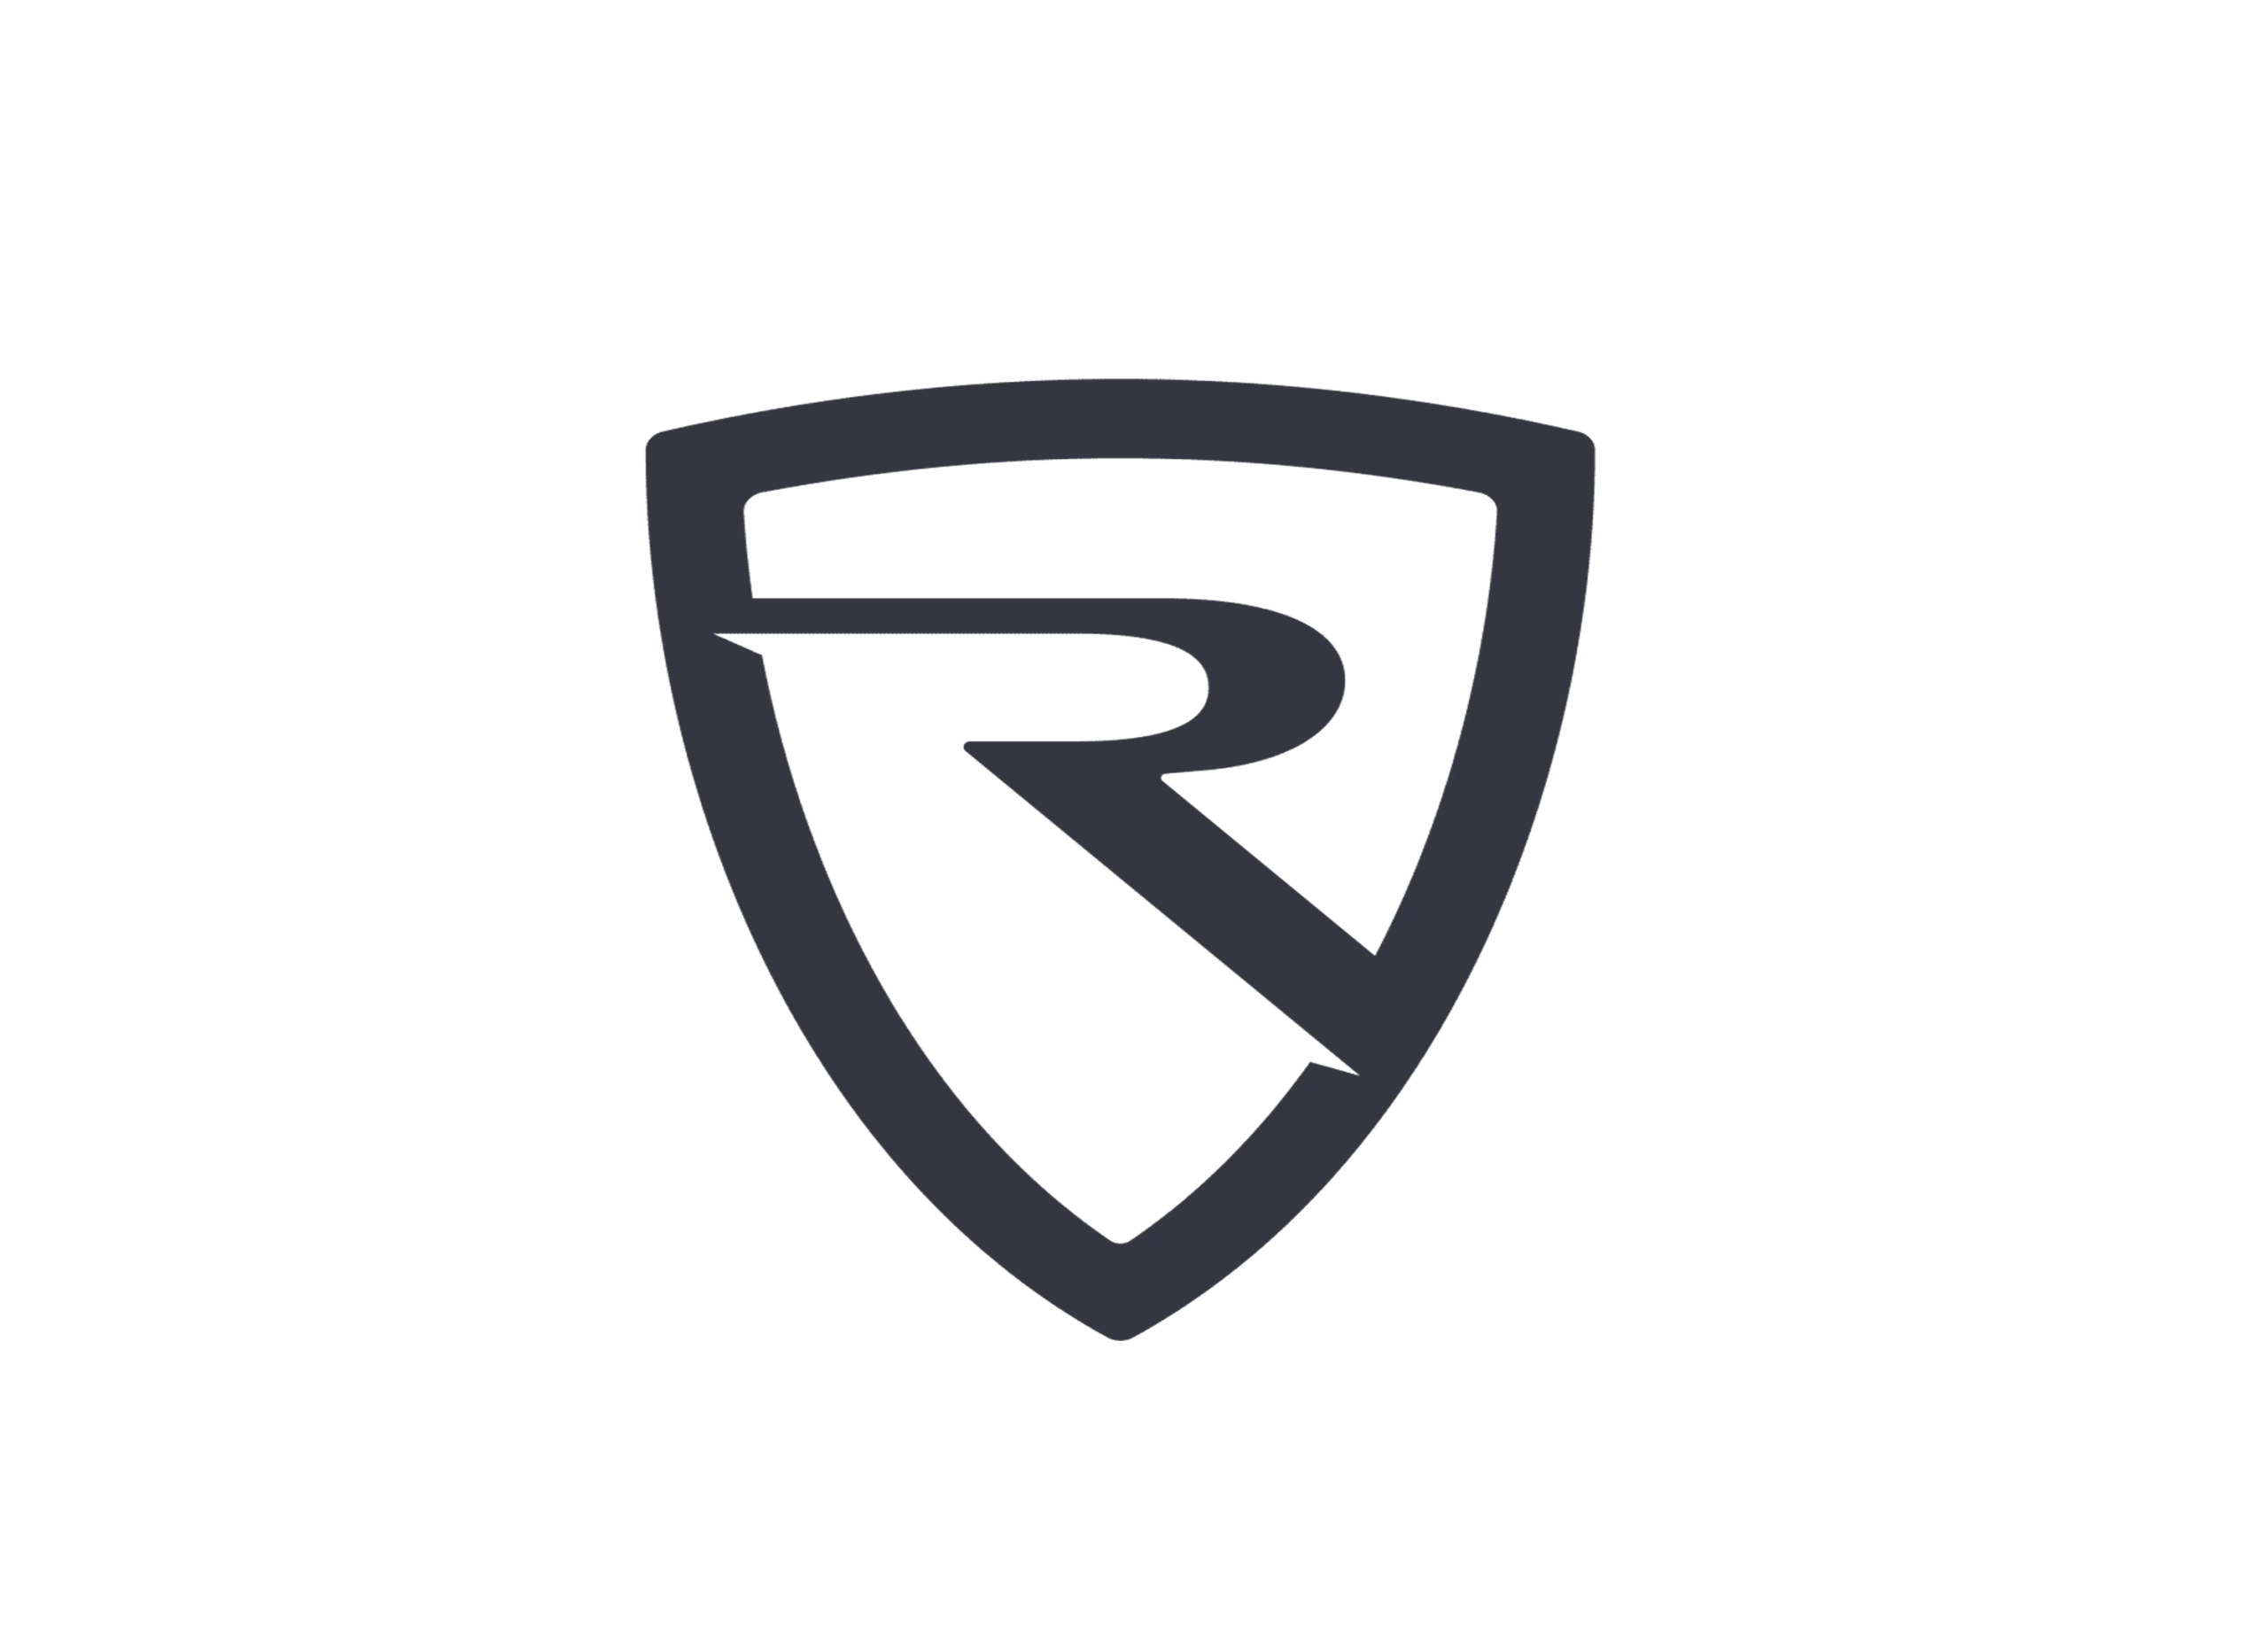 Rimac logo